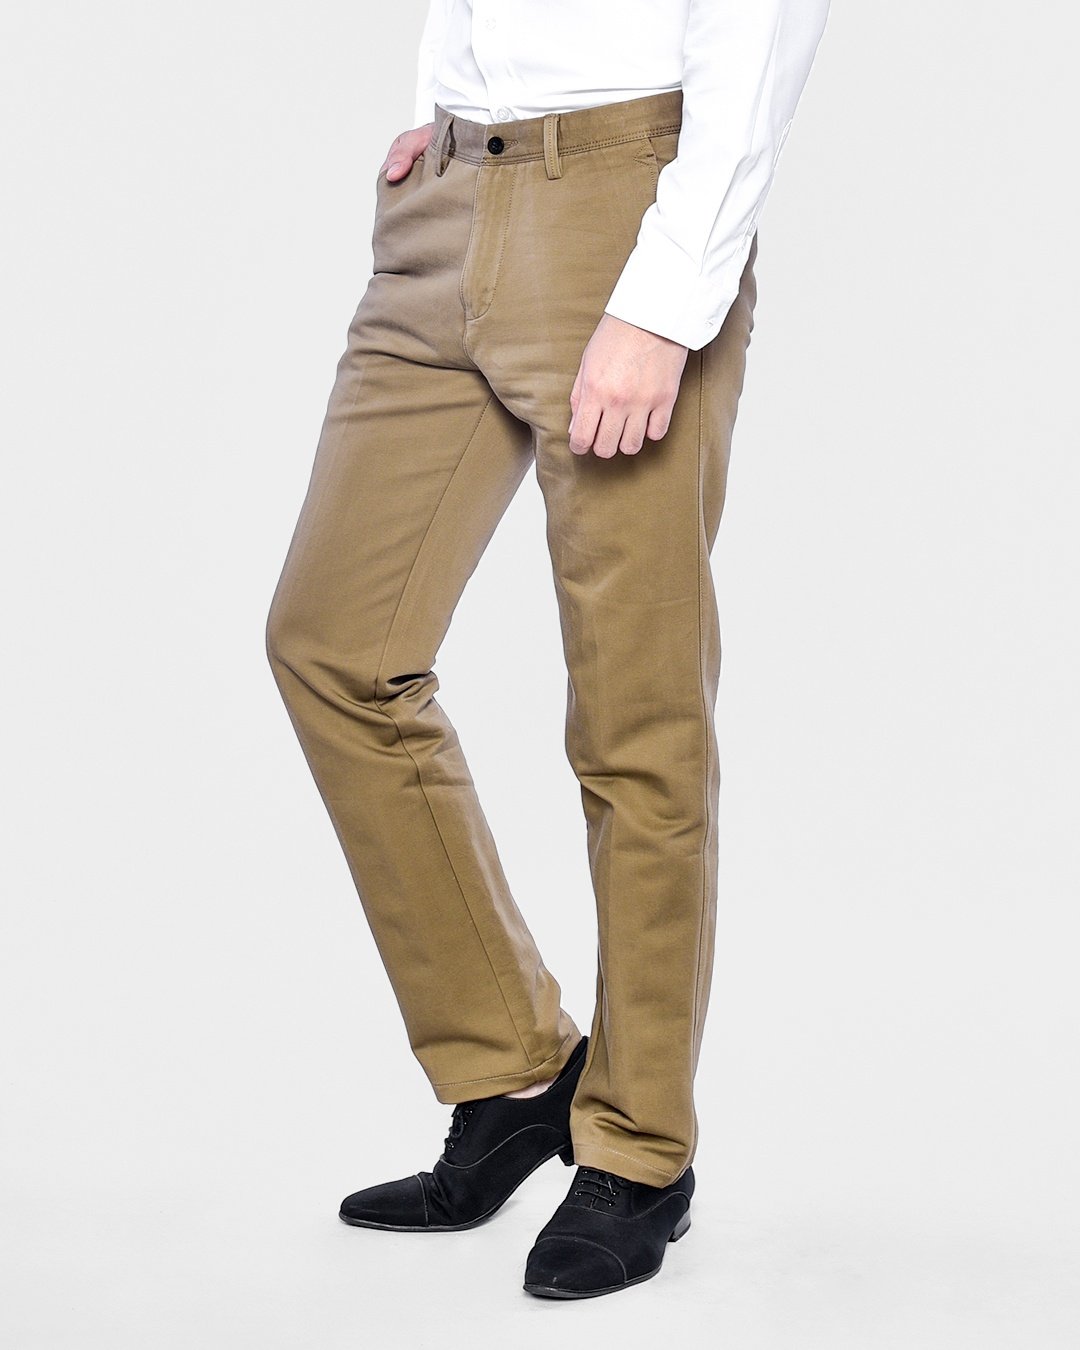 Modern Tapered Fit Khaki Pants (Flex Stretch) - Khaki - Men's Clothing ...